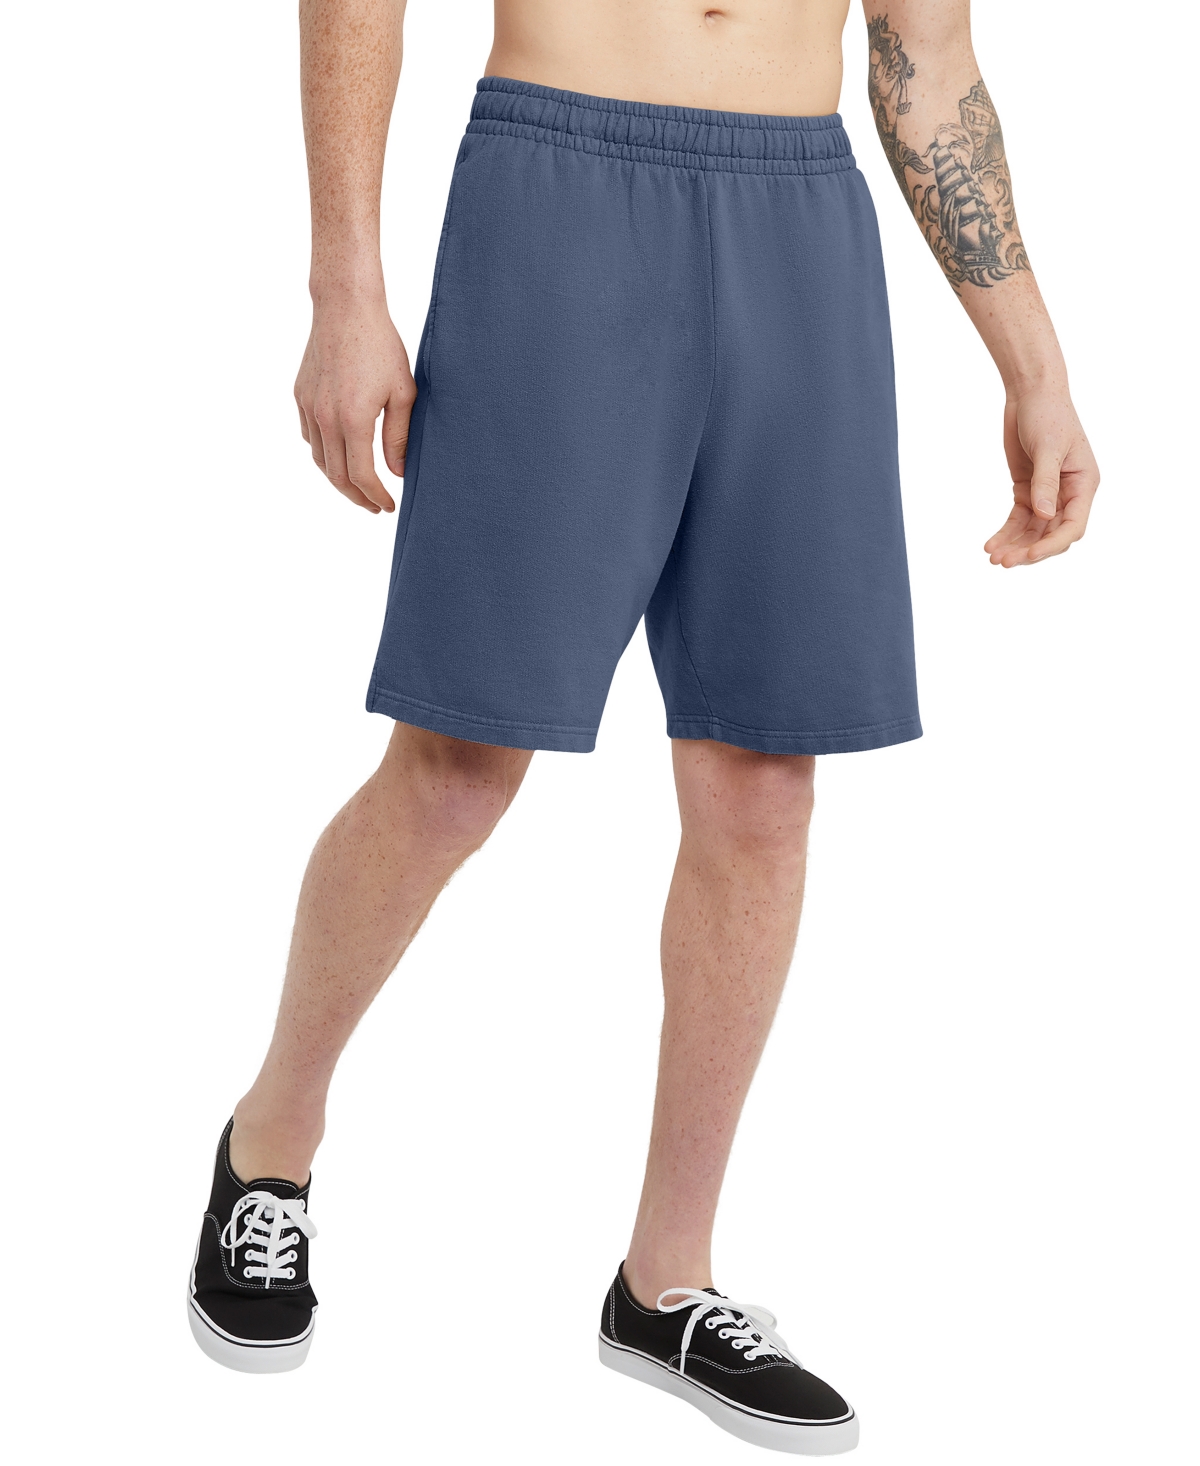 Men's Hanes Originals Garment Dyed 8" Sweat Shorts - Spanish Moss